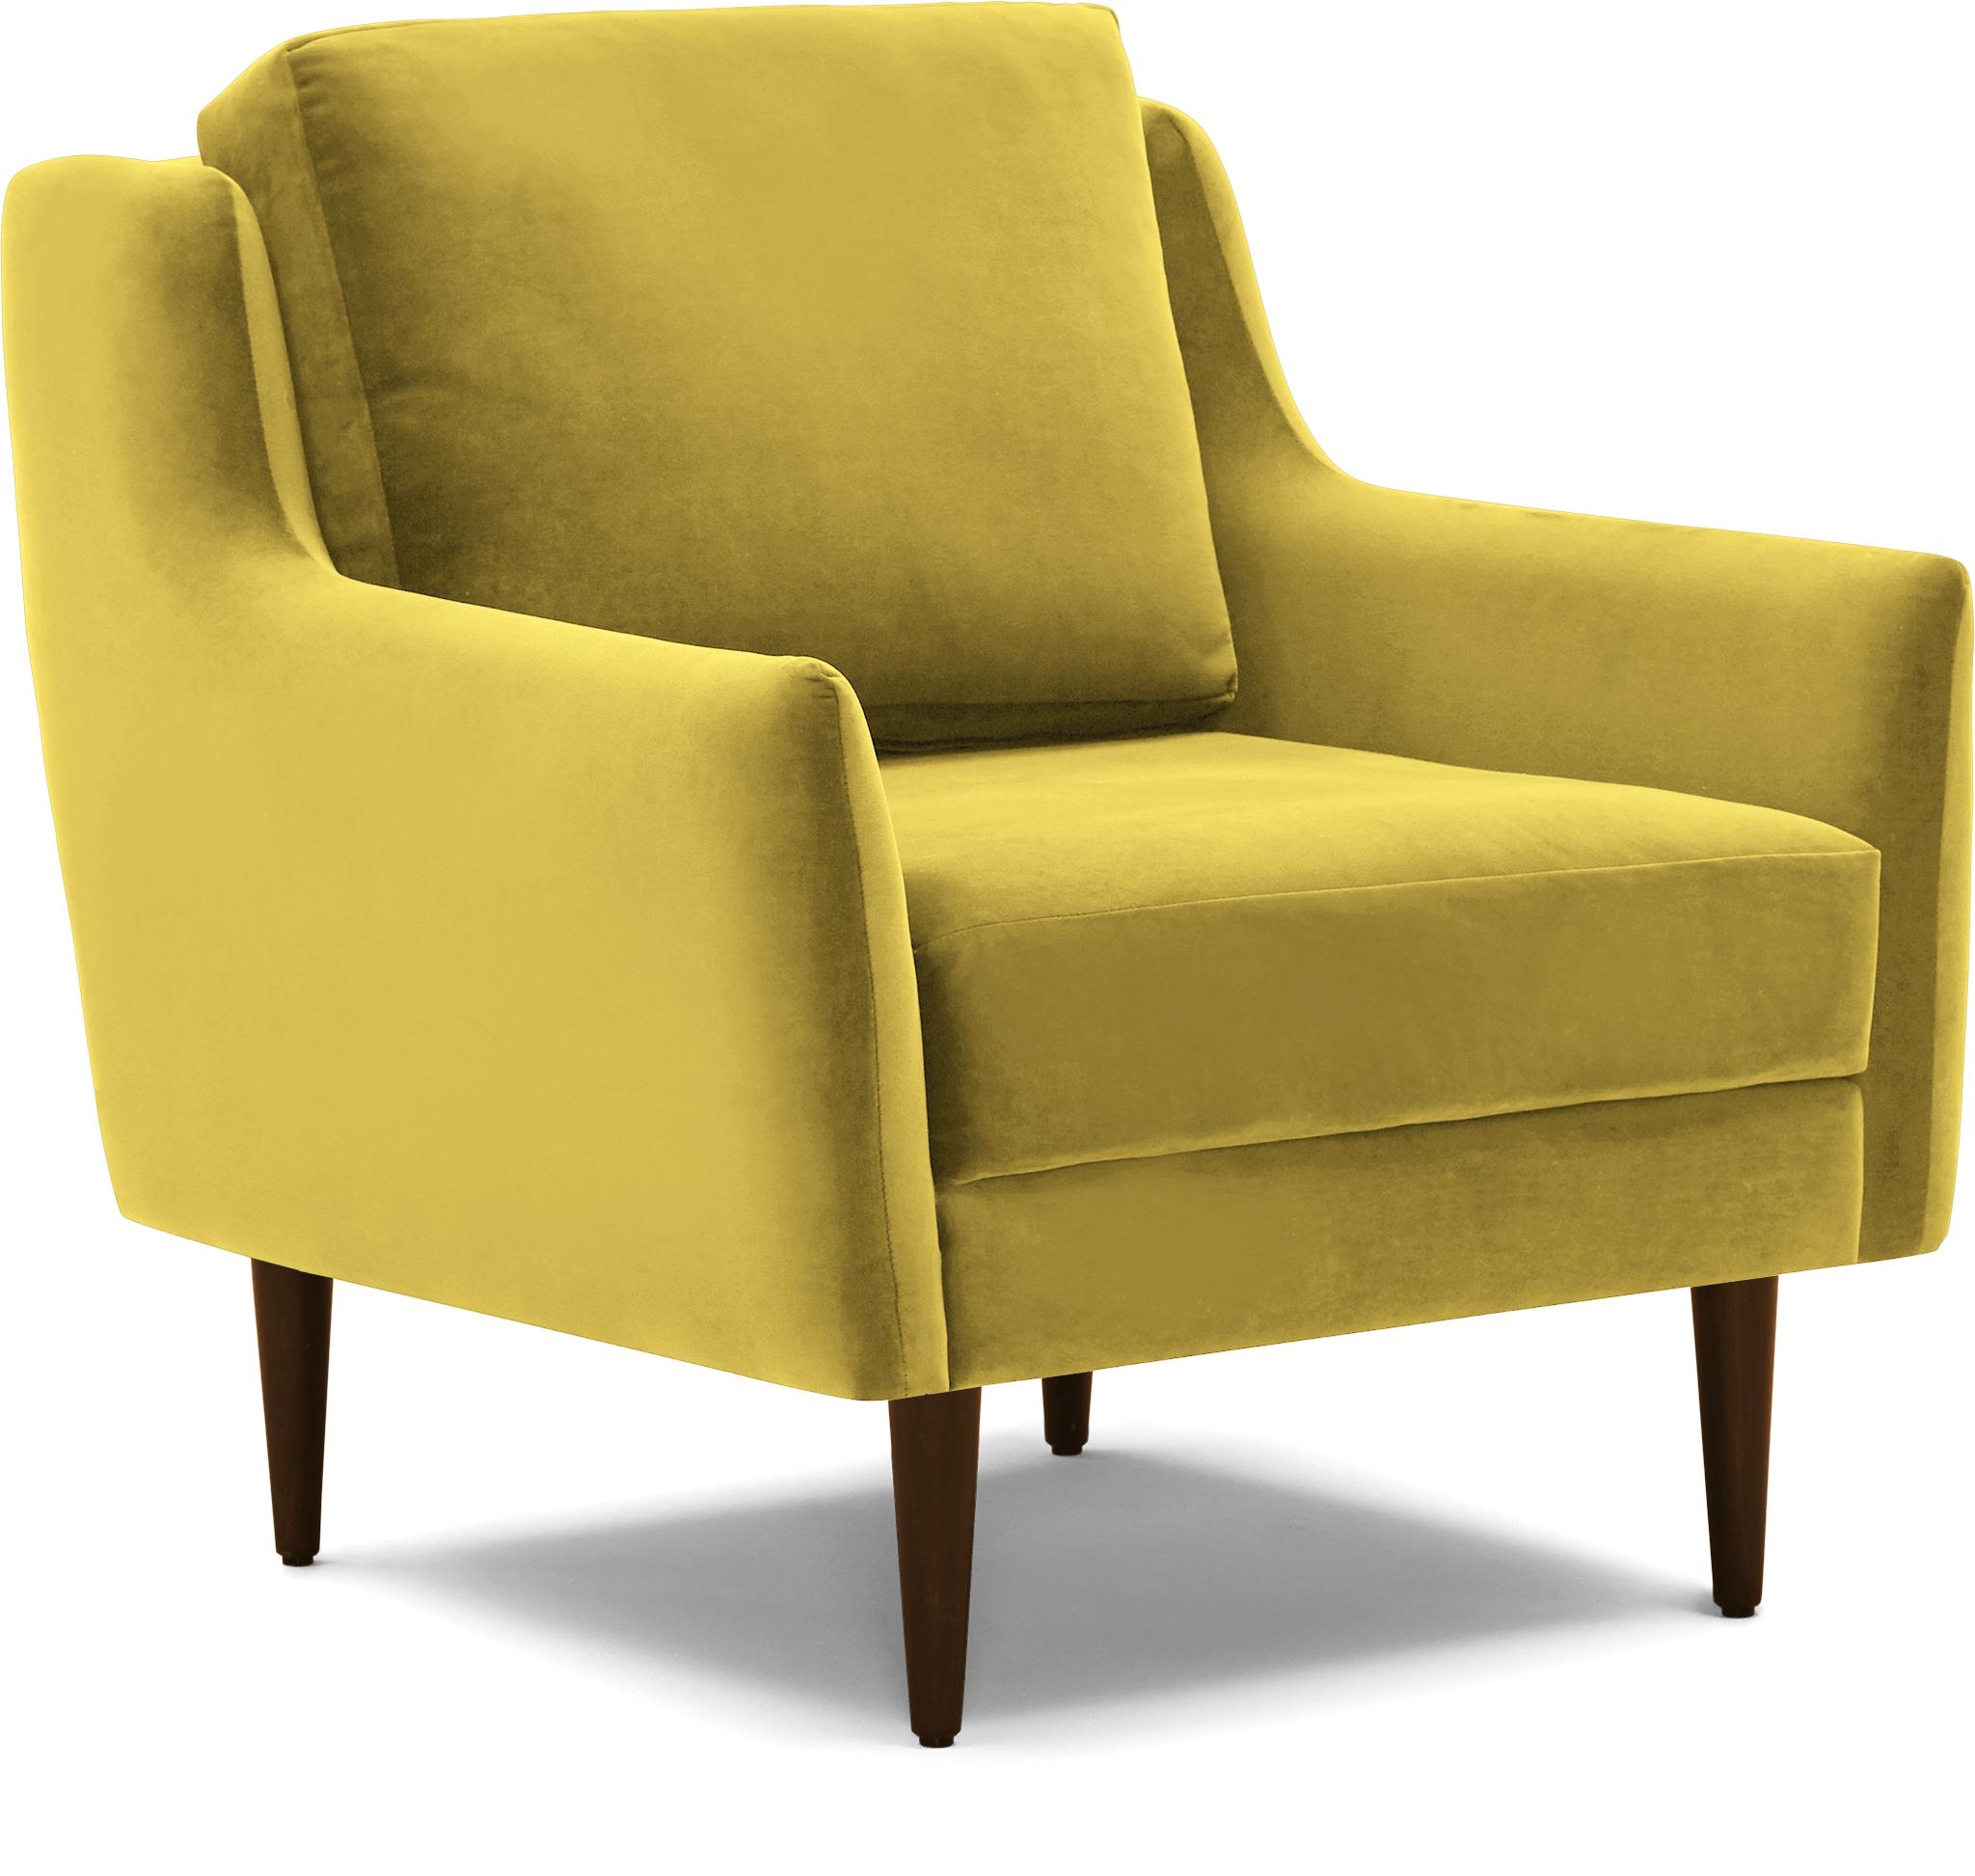 Yellow Bell Mid Century Modern Chair - Taylor Golden - Mocha - Image 1